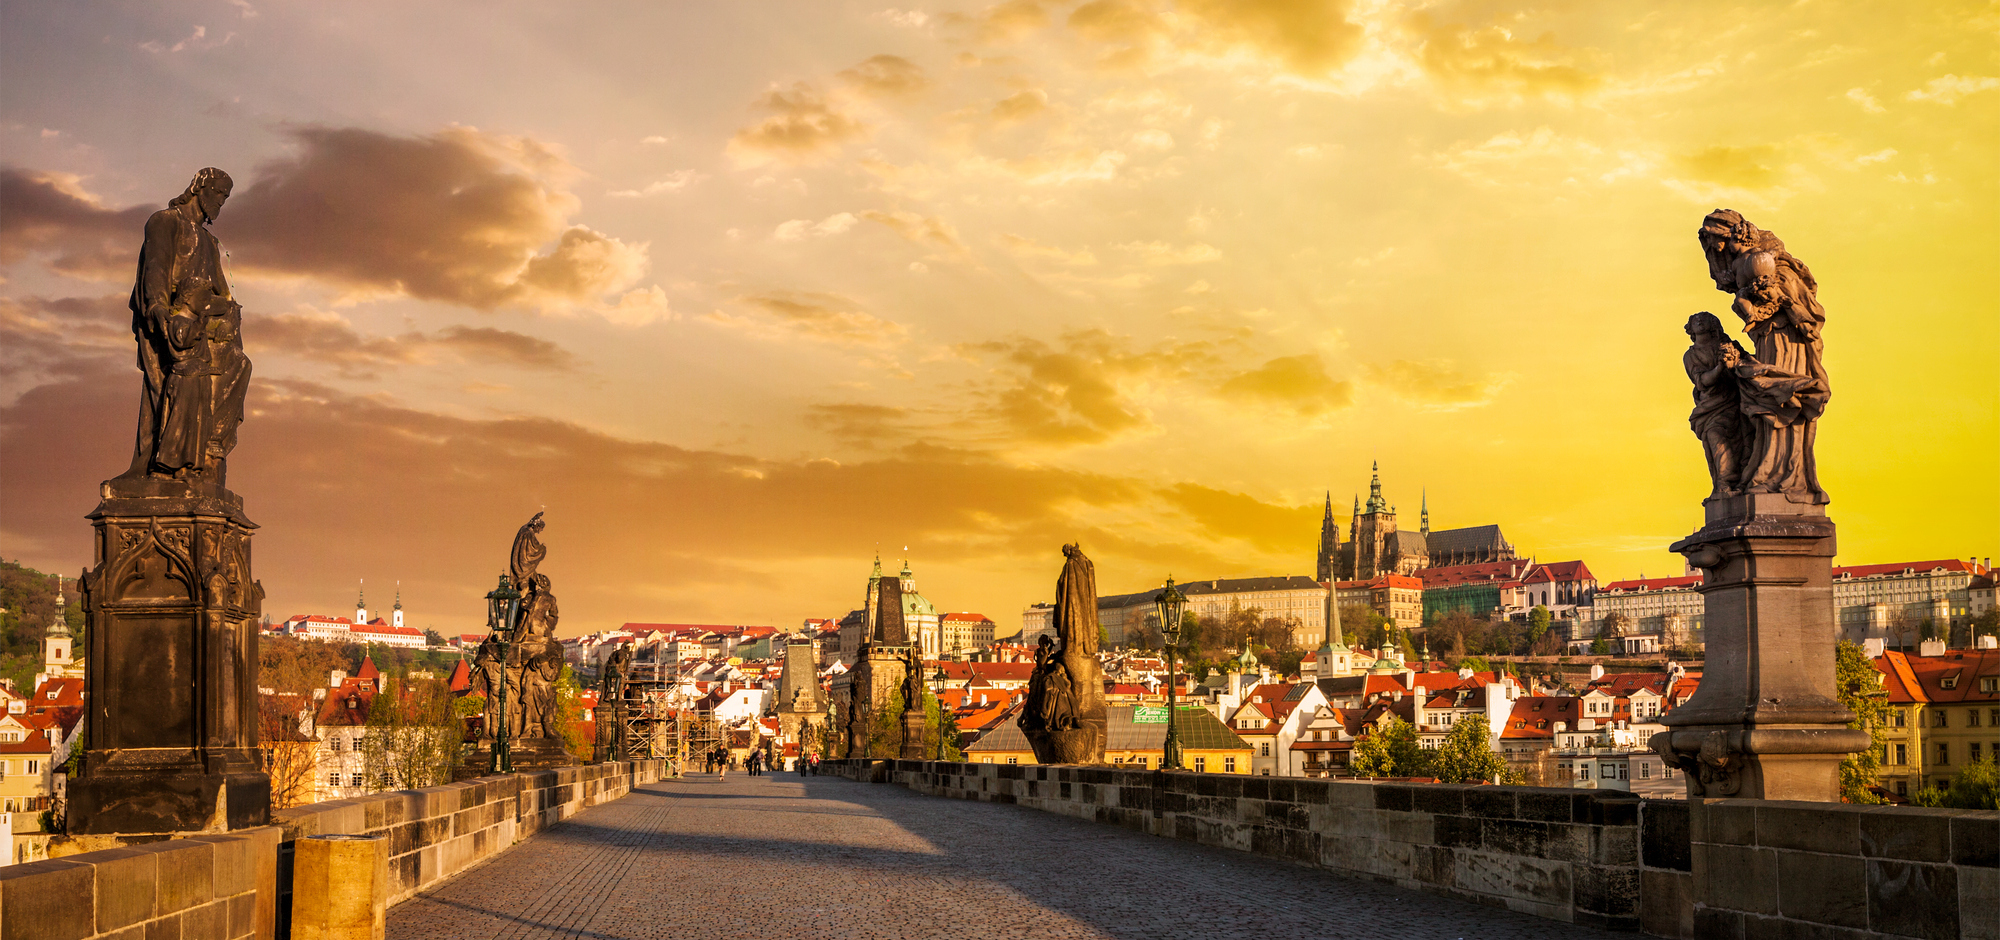 Charles bridge and Prague castle in the early morning on sunrise. Prague, Czech Republic